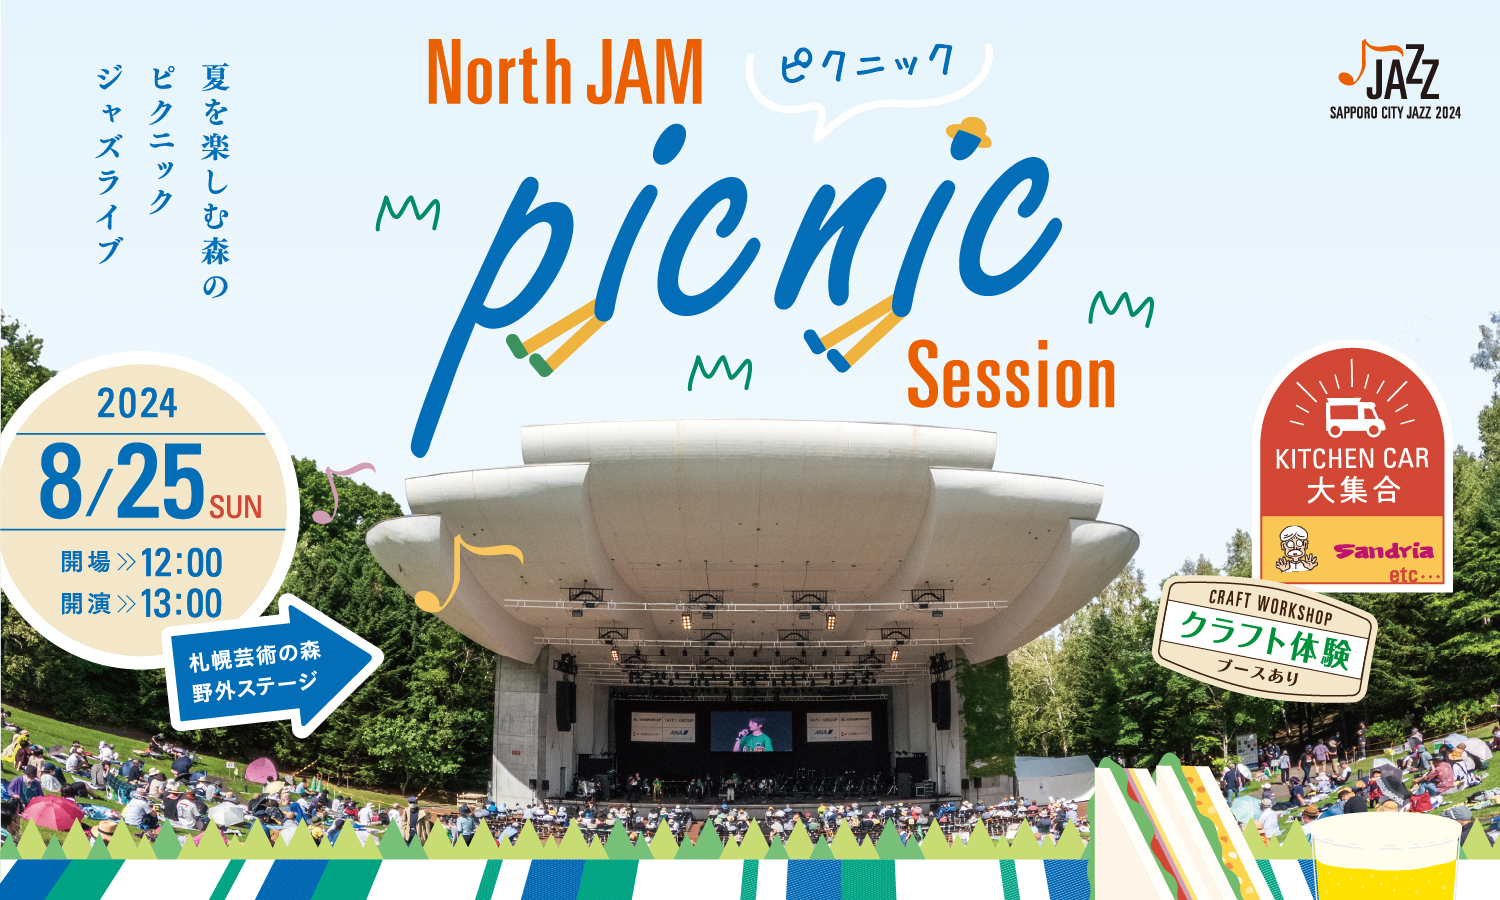 North JAM picnic Session 2024